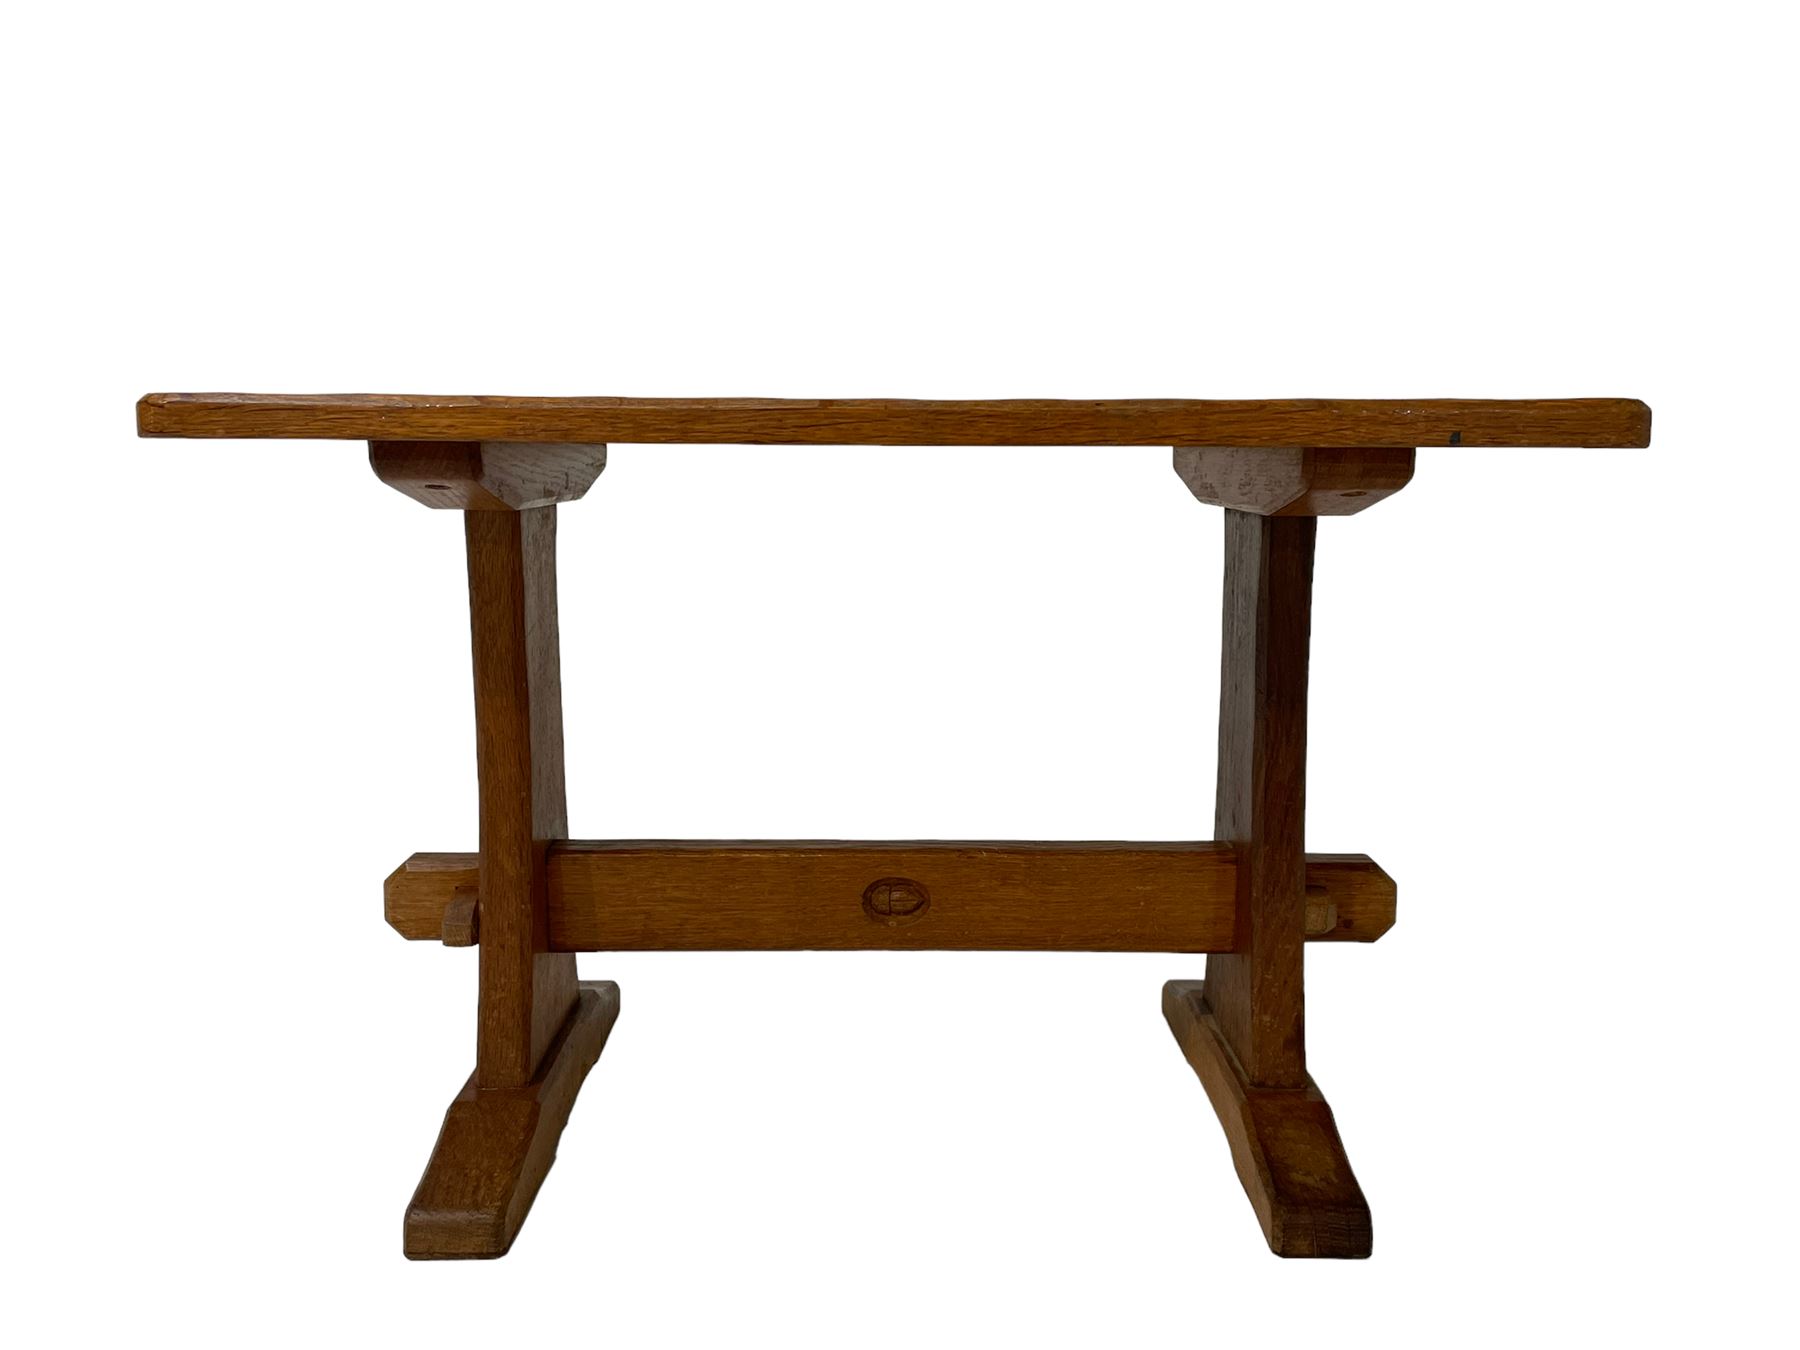 Acornman - rectangular adzed oak coffee table - Image 2 of 8